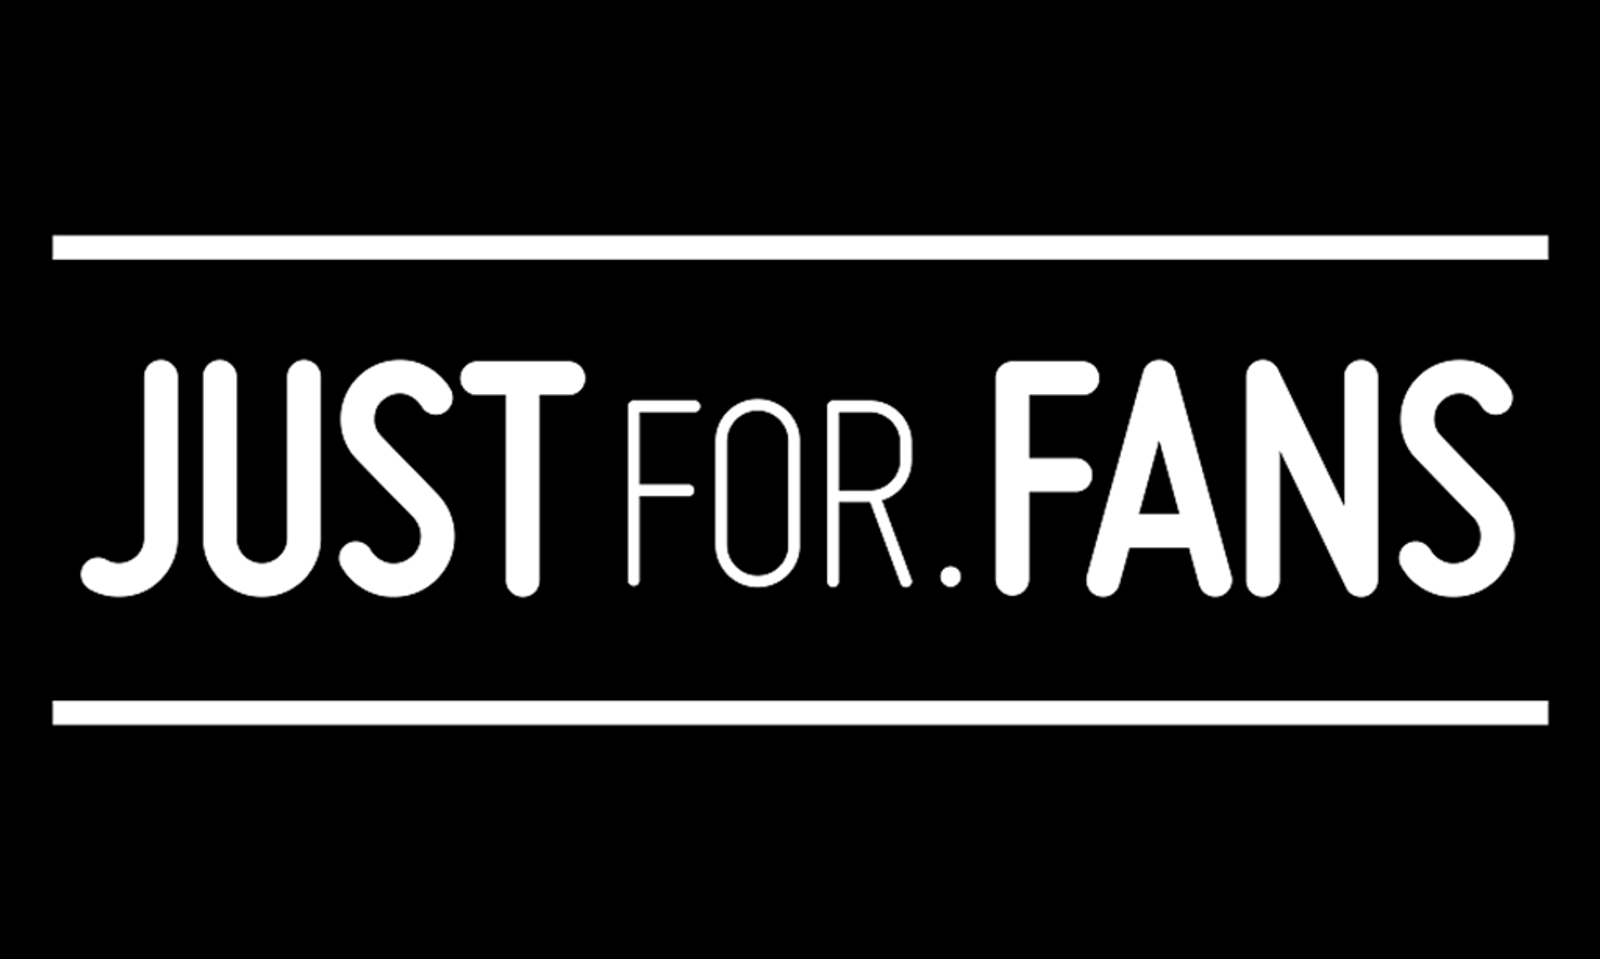 JustFor.fans Creates ‘Quarantine Scene’ Contest With $3,000 Prize